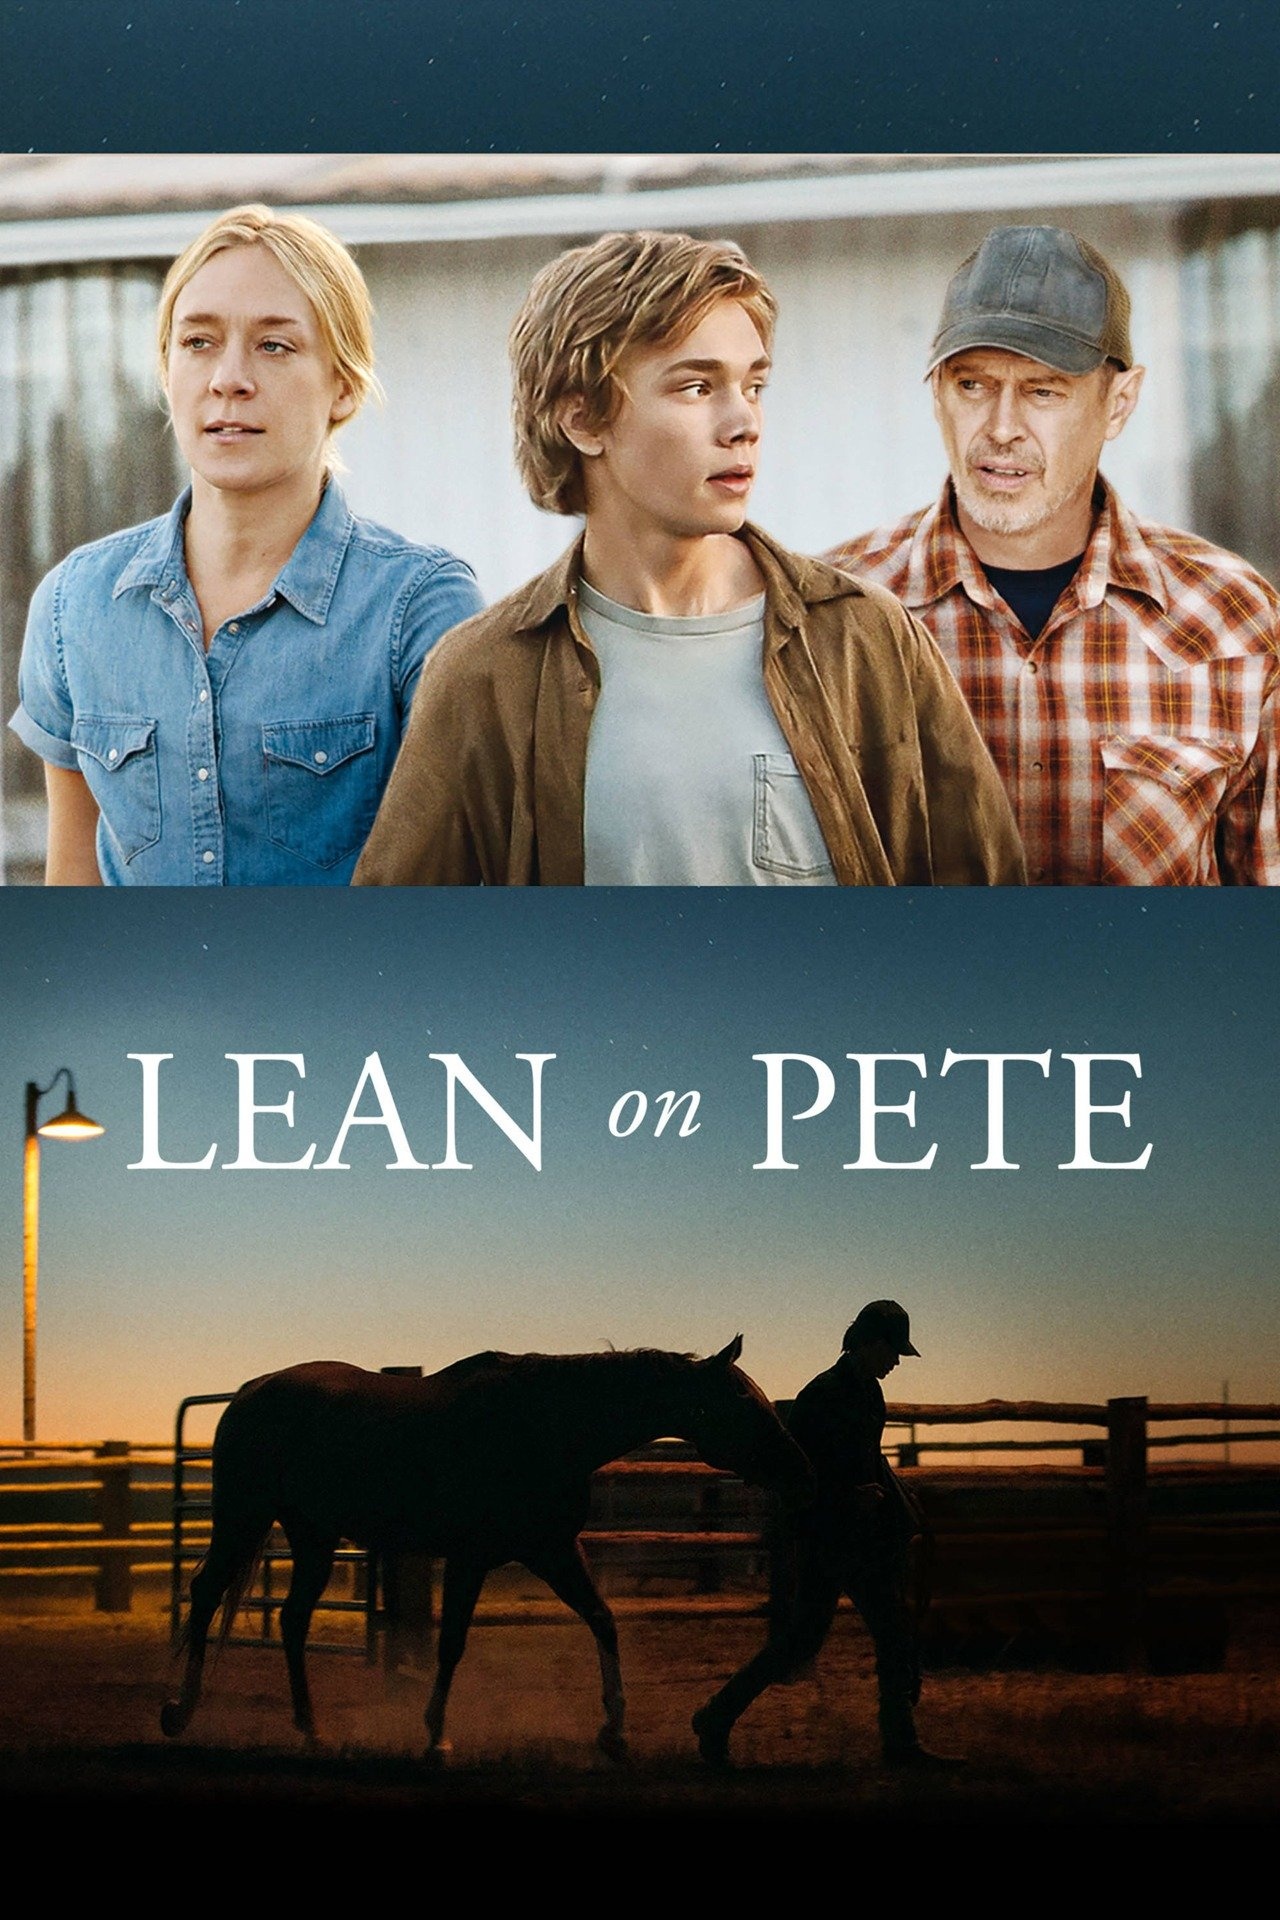 Lean on Pete movie, Watch full movie free, Online streaming, Plex platform, 1280x1920 HD Handy